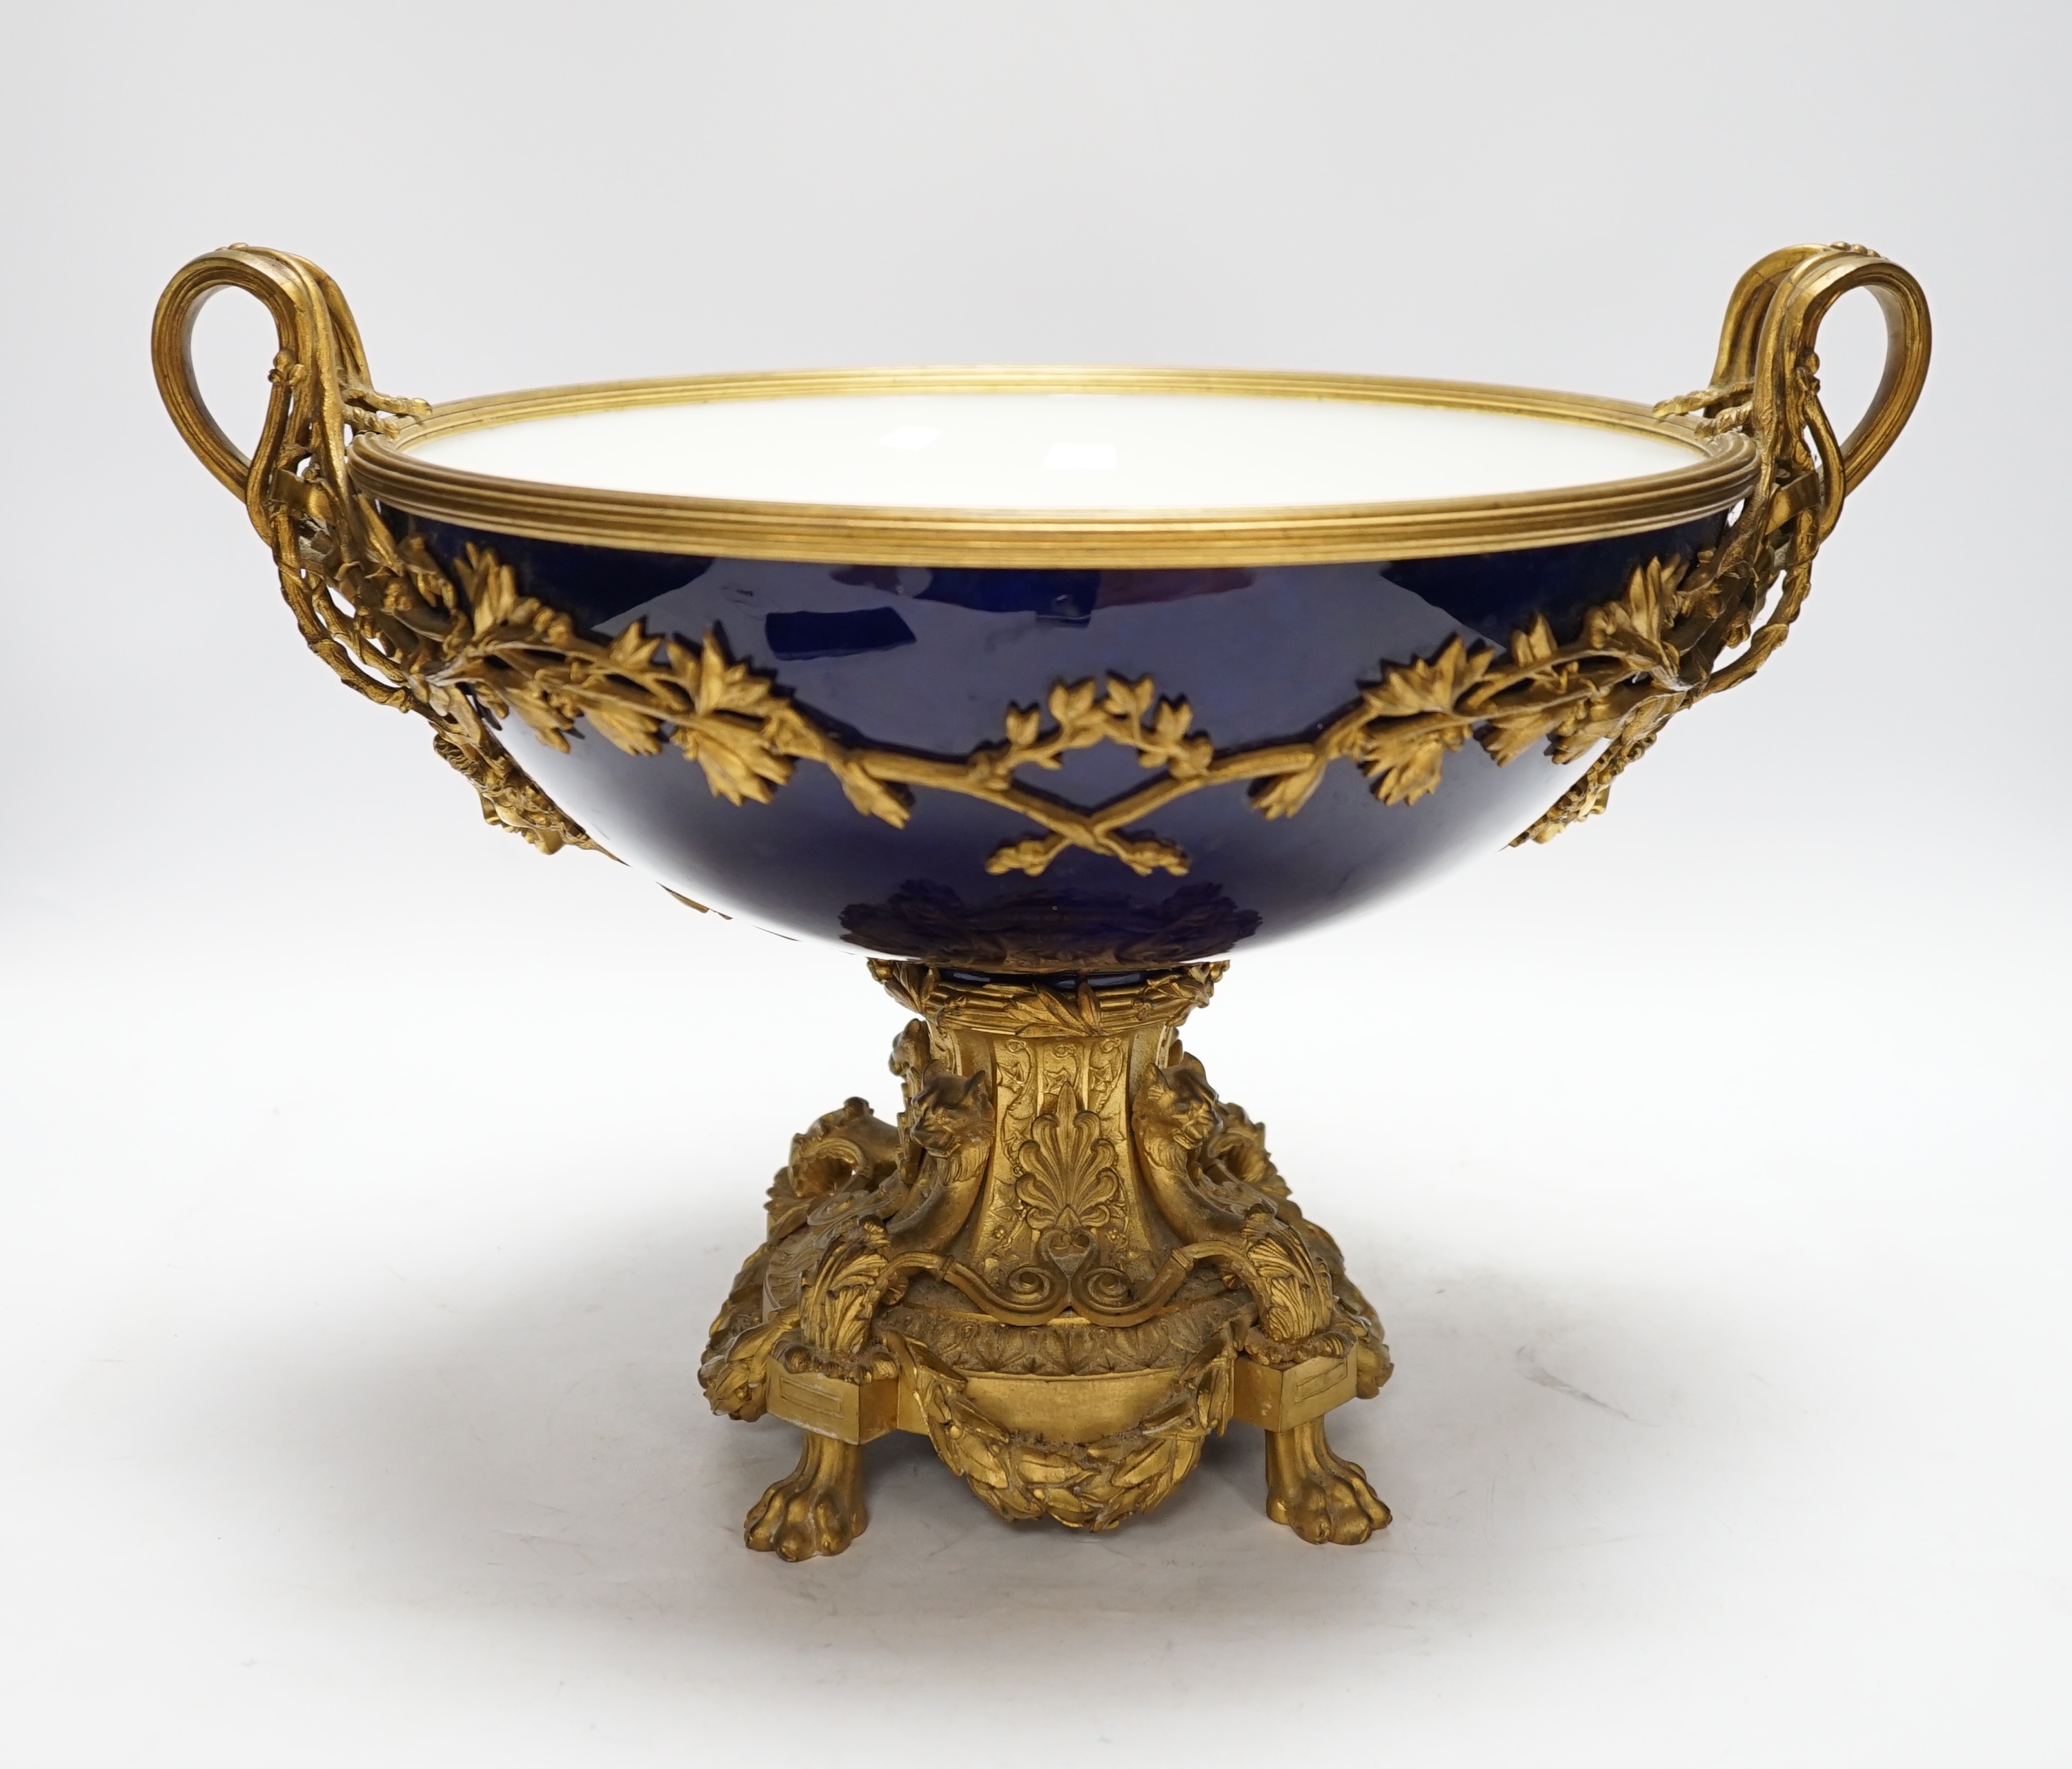 A large Louis XVI style ormolu and porcelain double handled centre dish, 27.5cm high, 31cm diameter